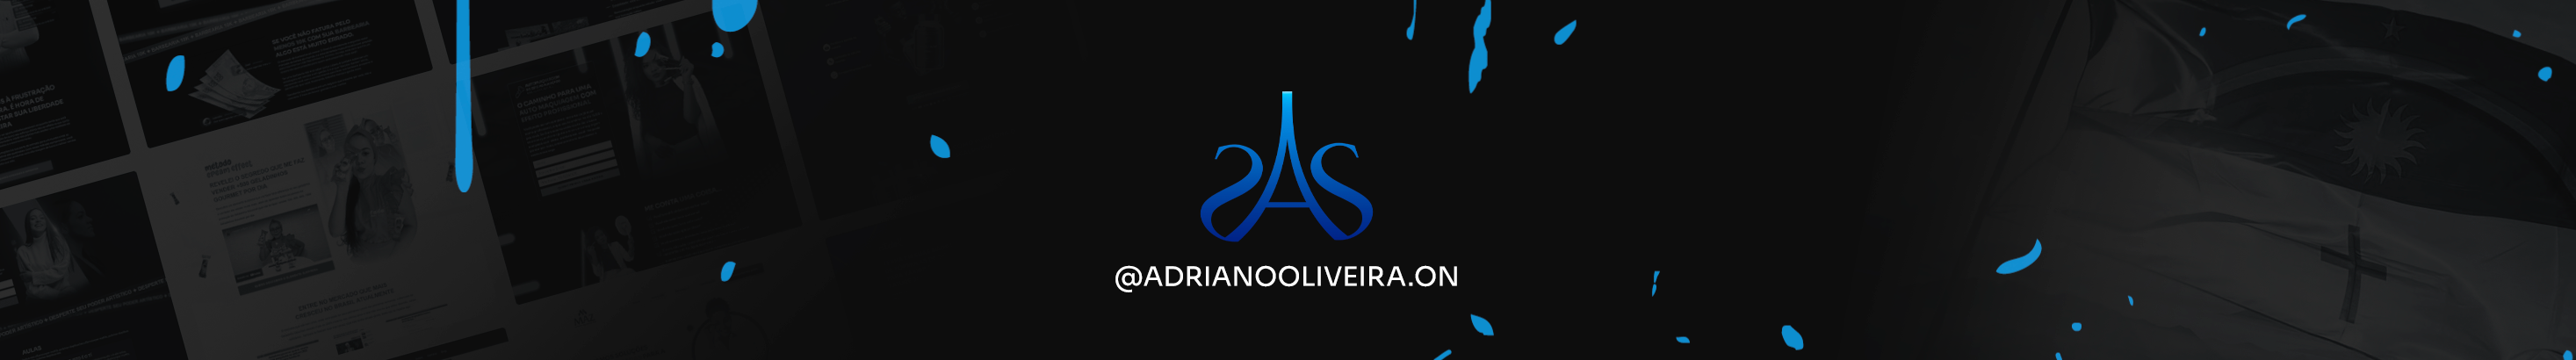 Adriano Oliveira's profile banner